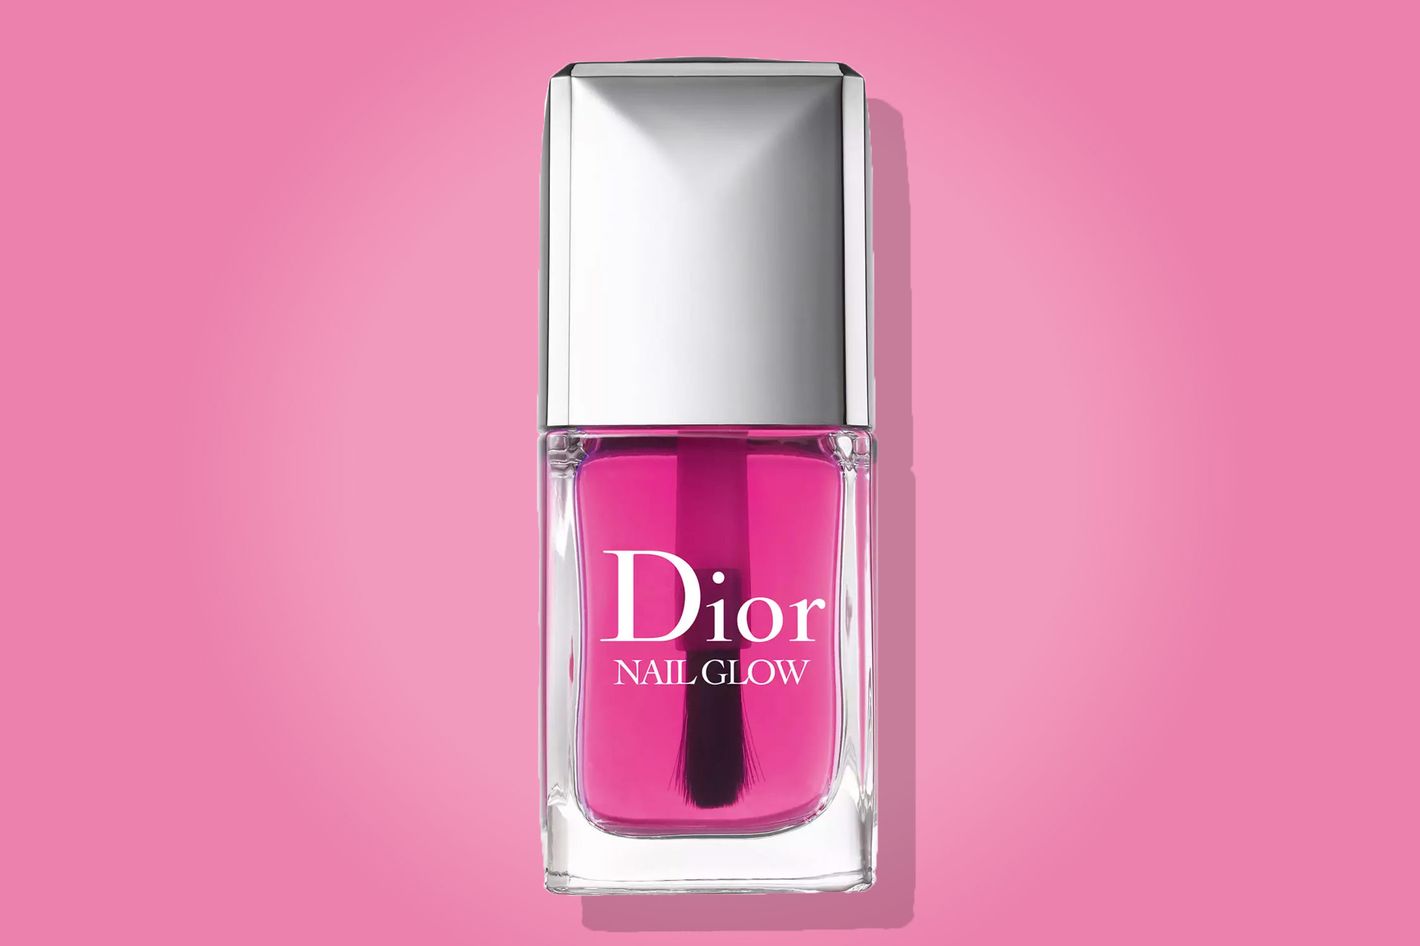 Dior Nail Glow Review - The Skincare Edit